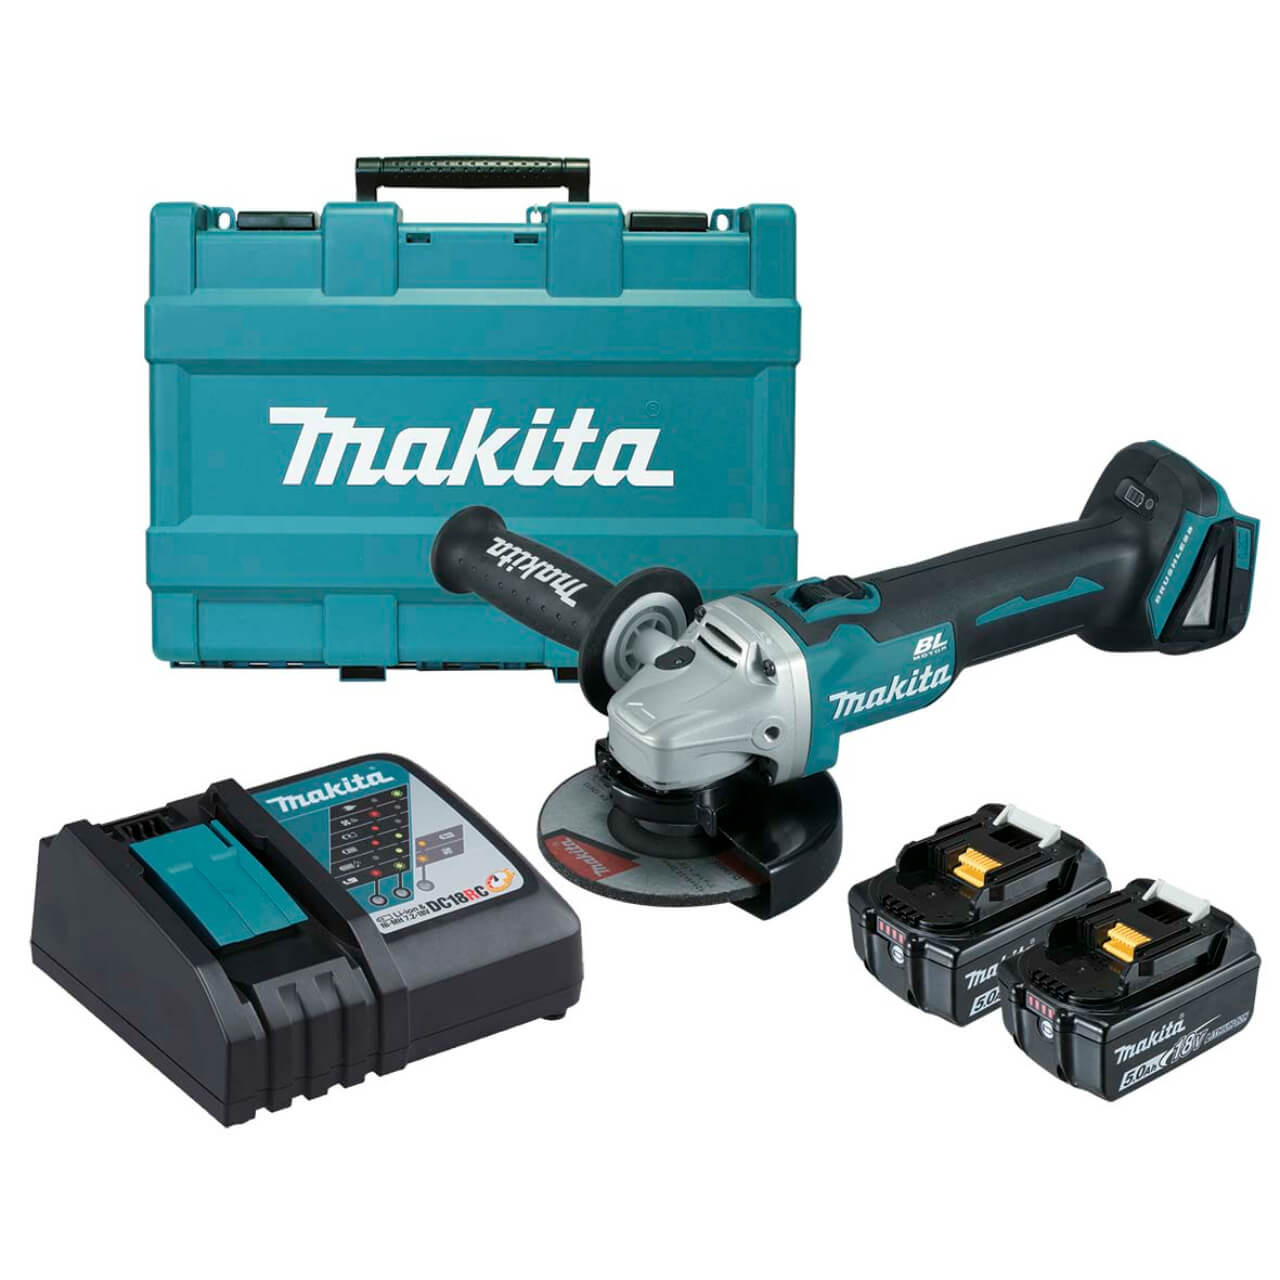 Makita 18V BRUSHLESS 125mm Slide Switch Brake Angle Grinder Kit - Includes 2 x 5.0Ah Batteries. Rapid Charger & Carry Case